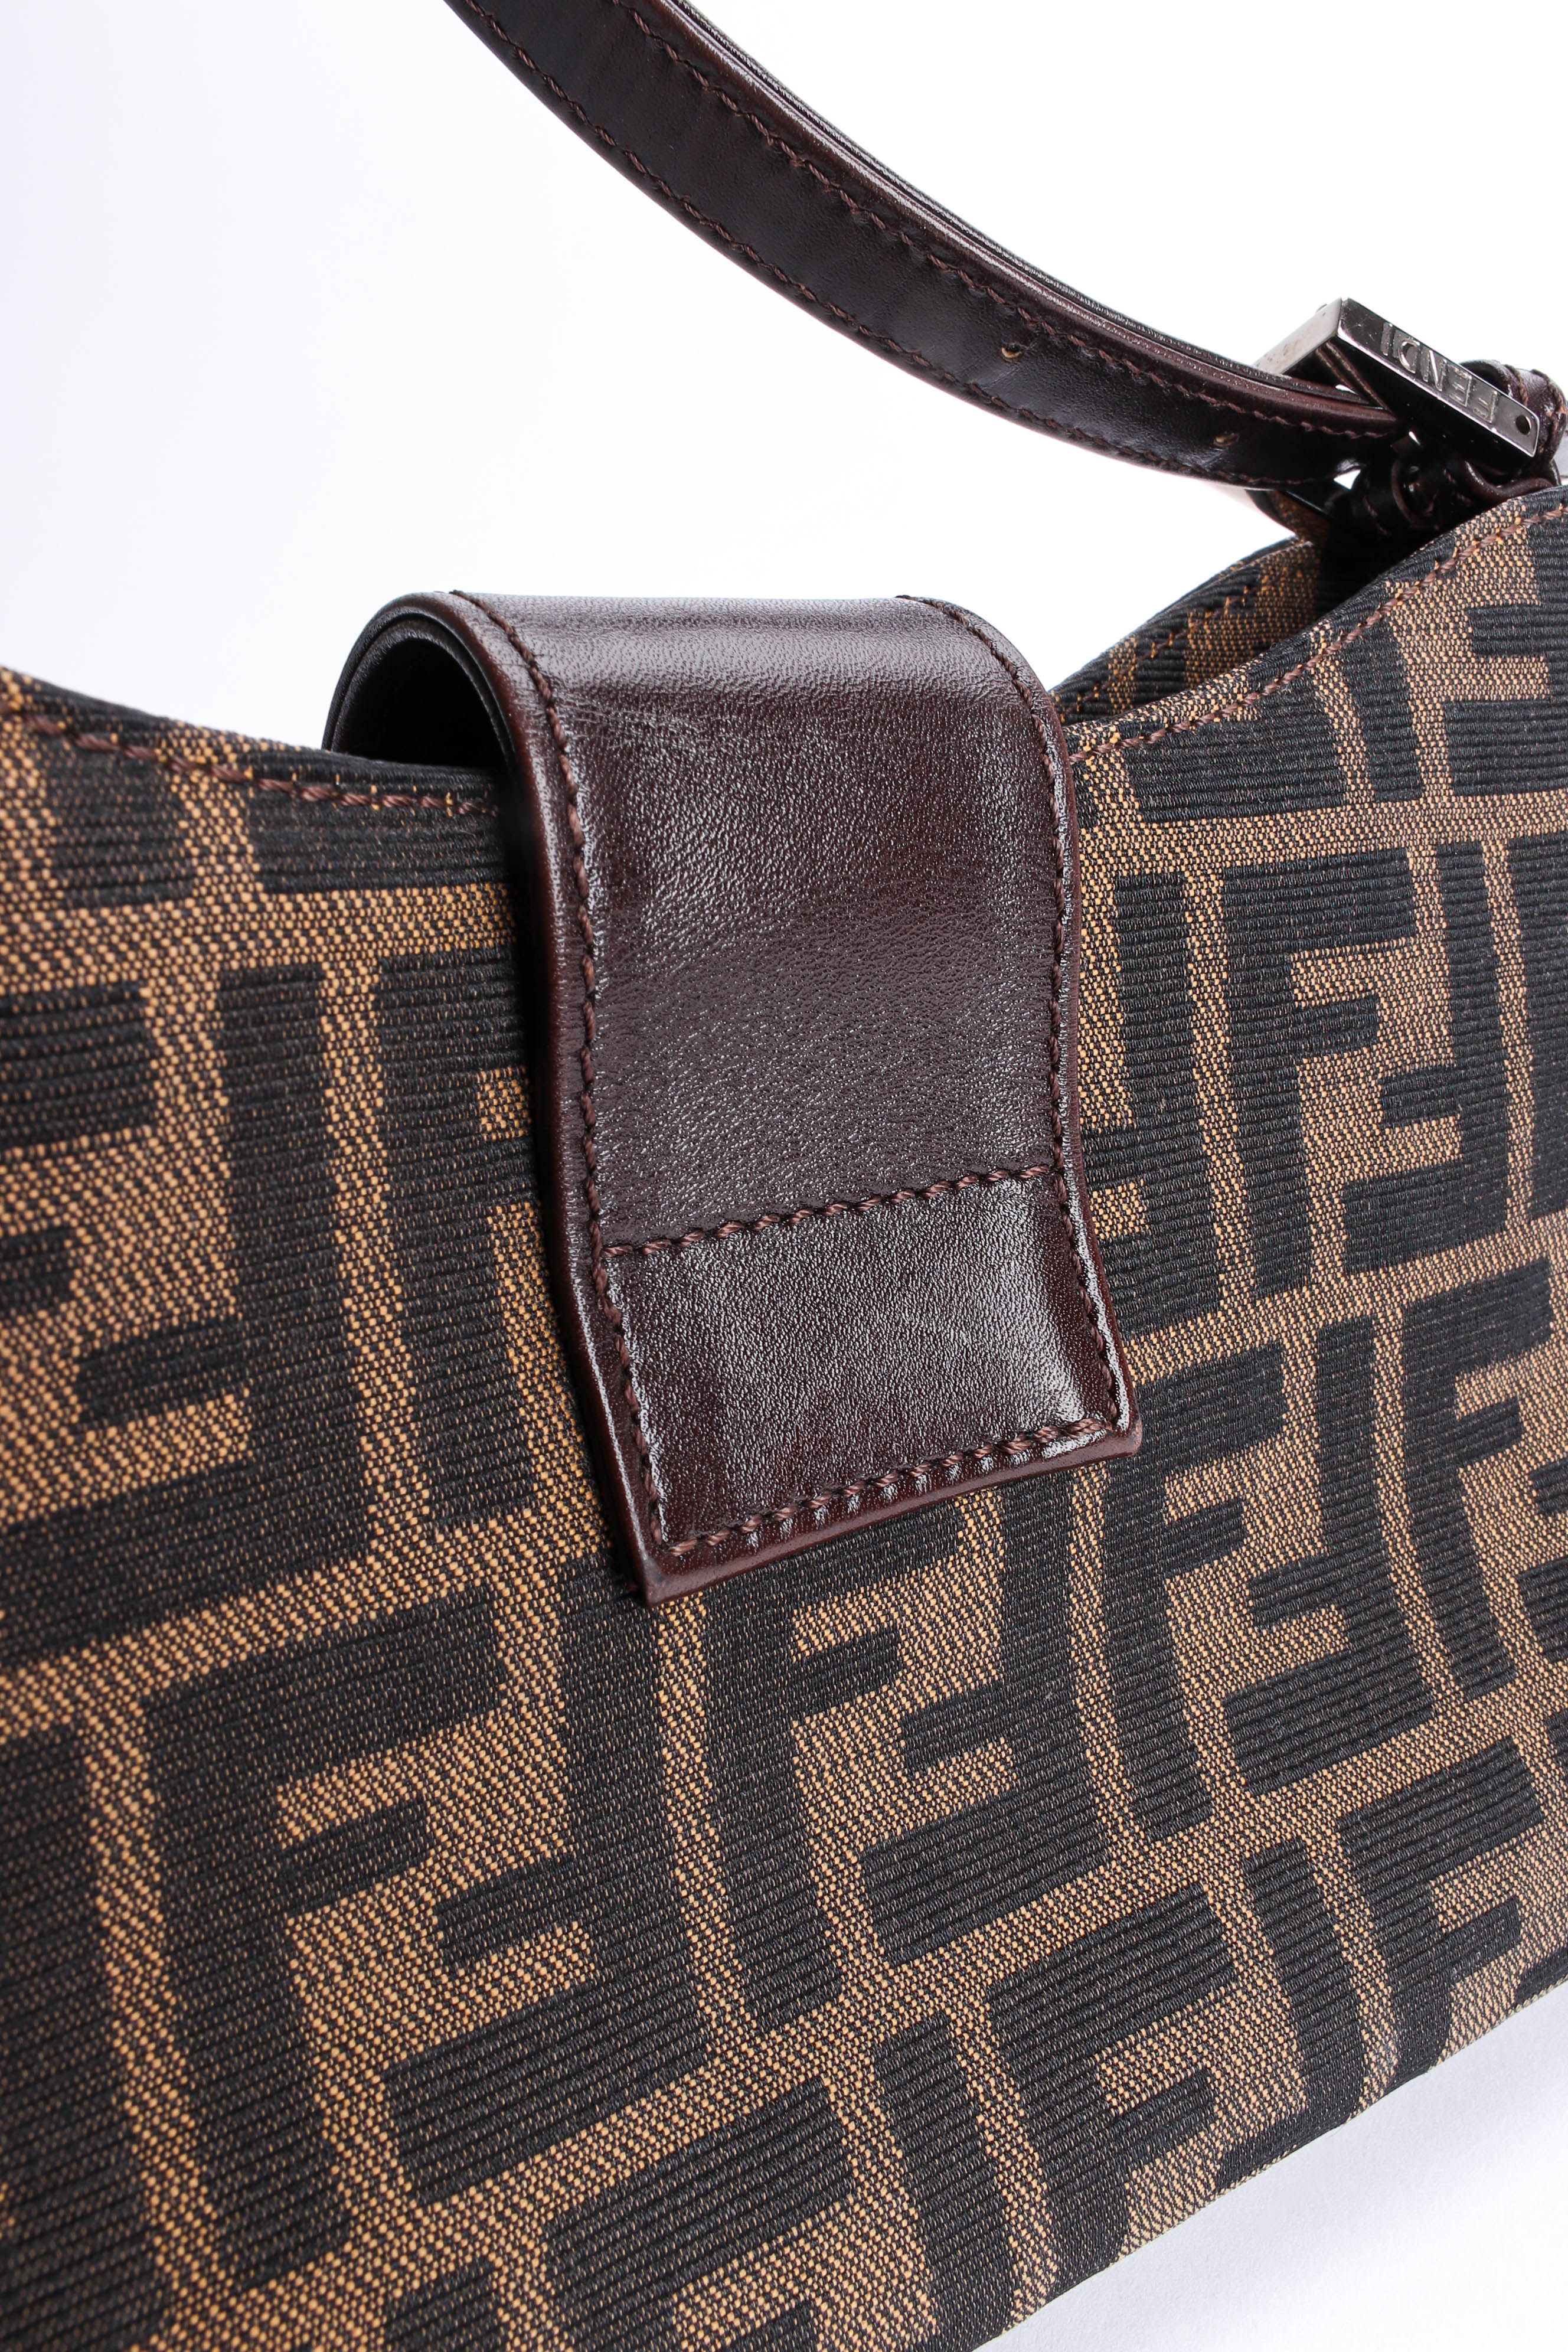 Vintage Fendi Zucca Monogram Shoulder Bag back close up @ Recess LA